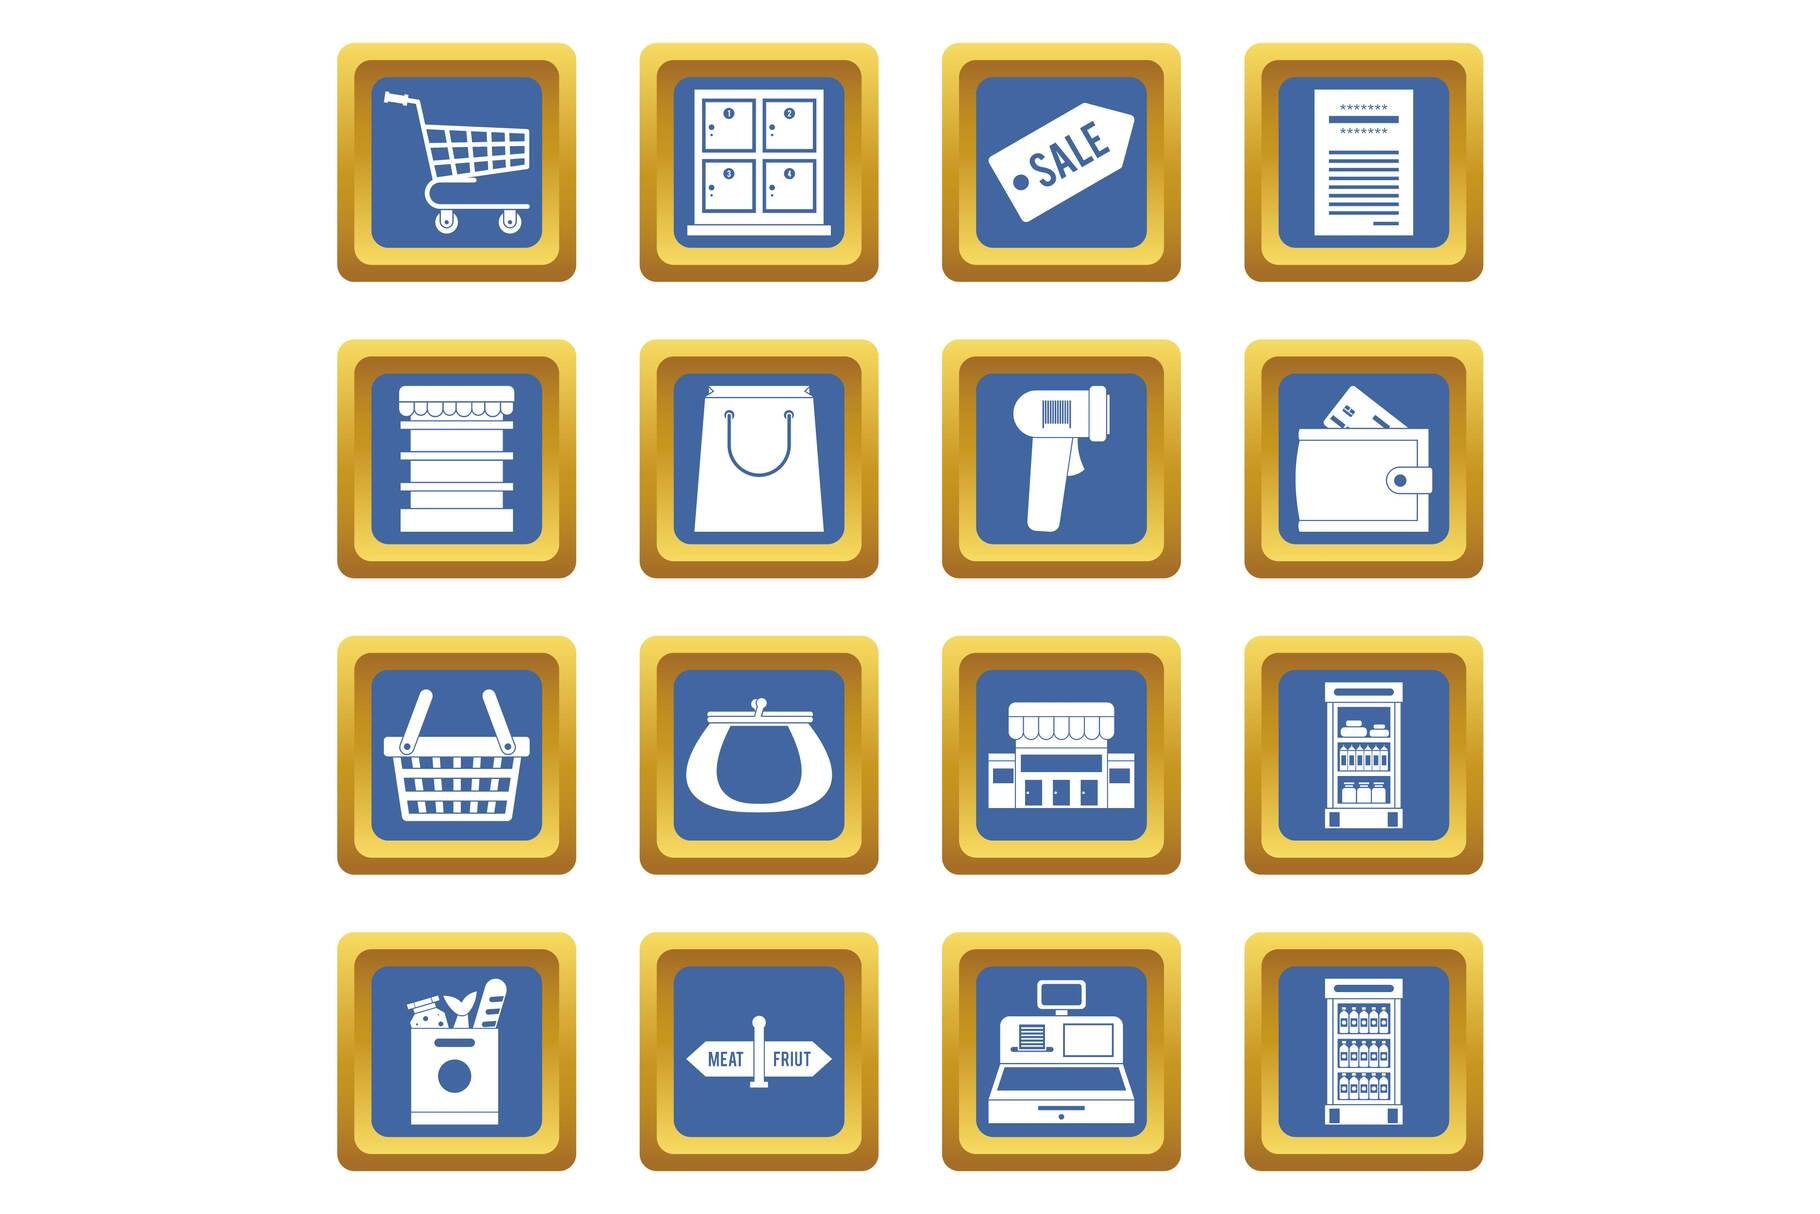 Supermarket icons set blue cover image.